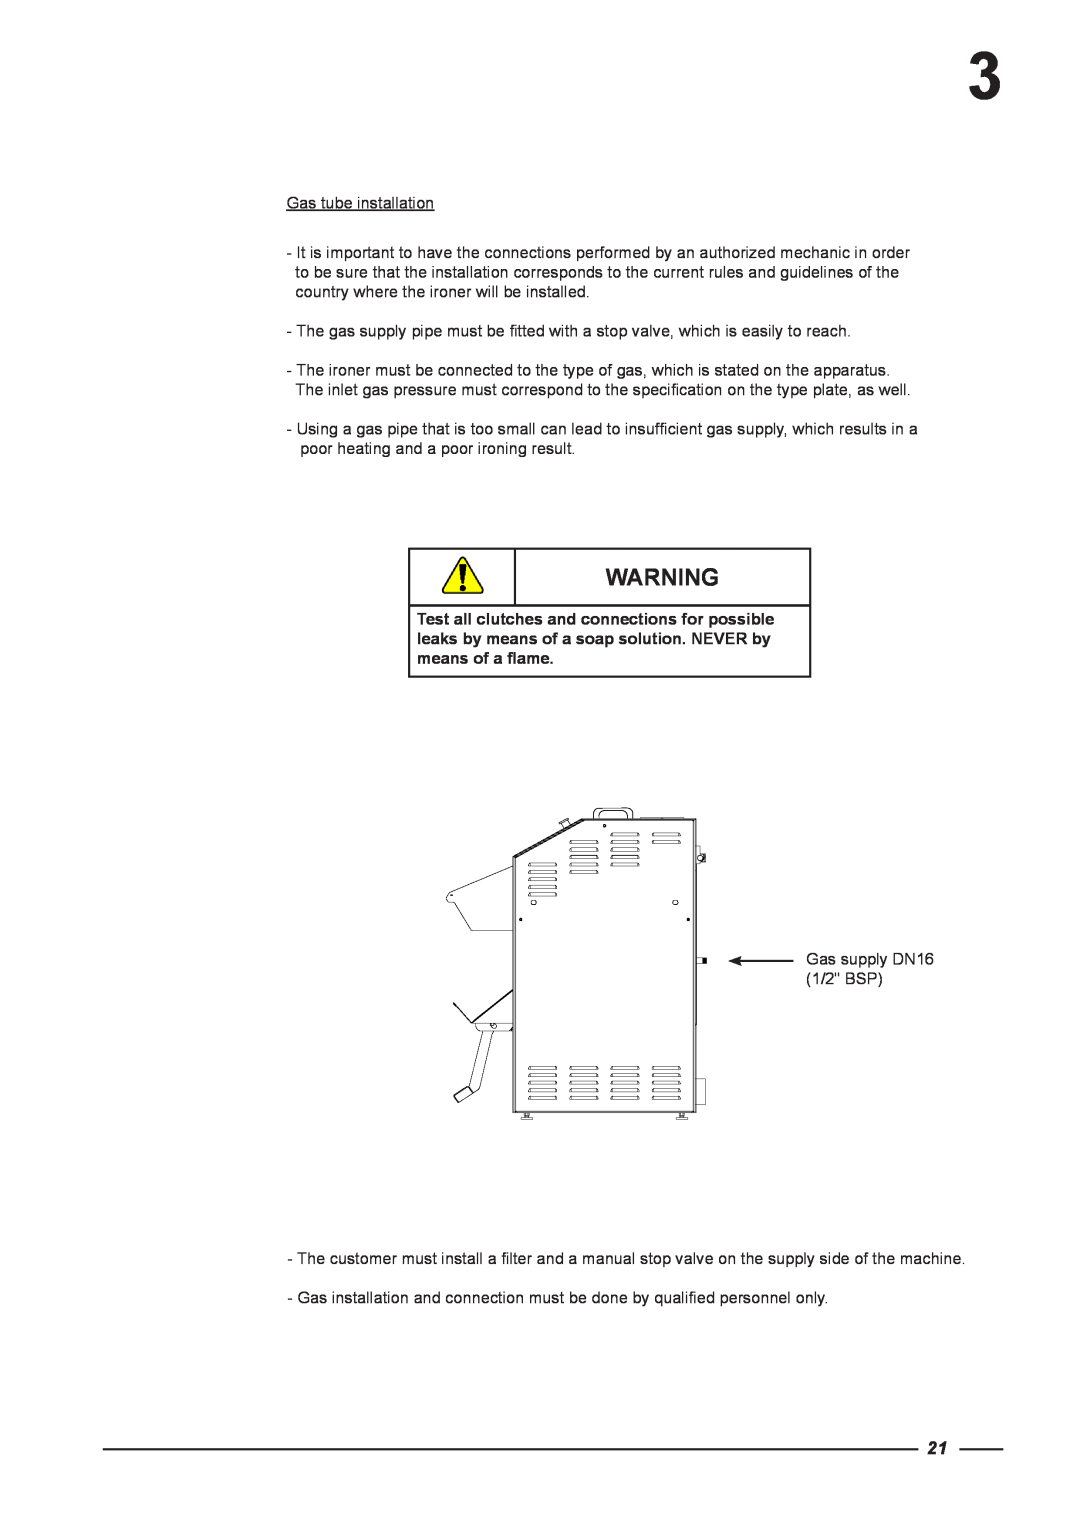 Alliance Laundry Systems CI 2050/325, CI 1650/325 instruction manual Gas tube installation 